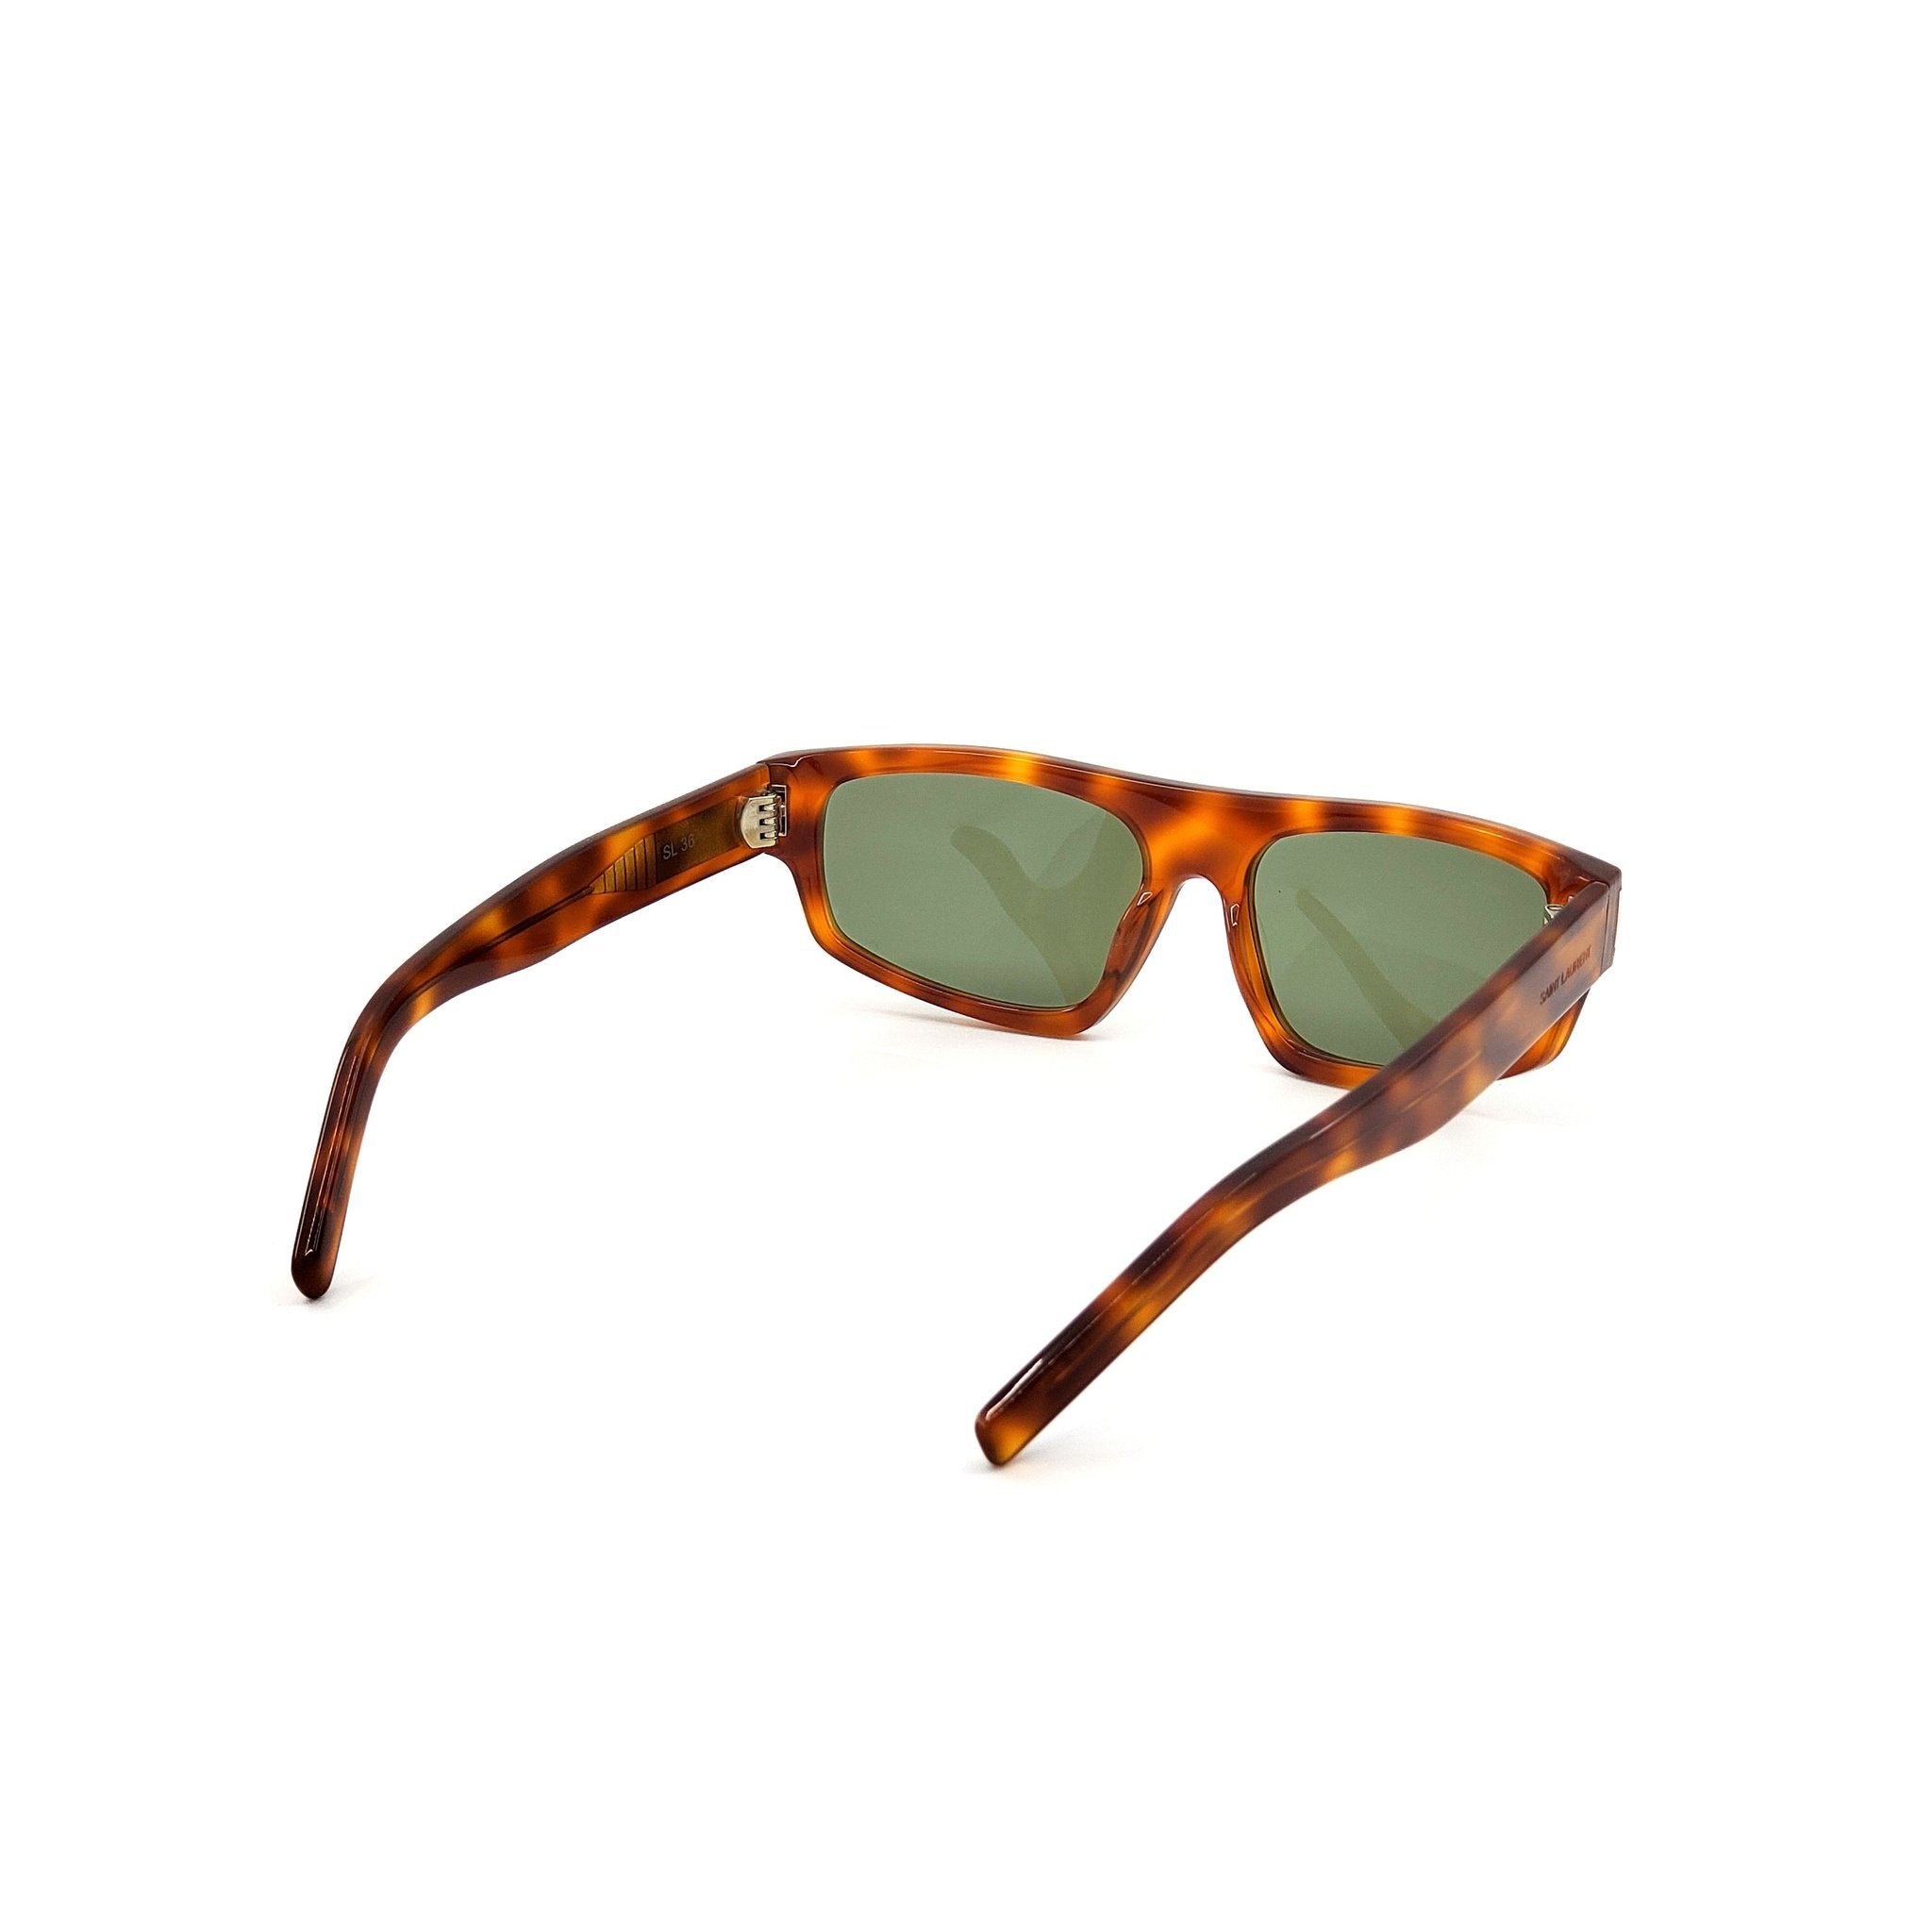 Yves Saint Laurent Sunglasses - YSL36